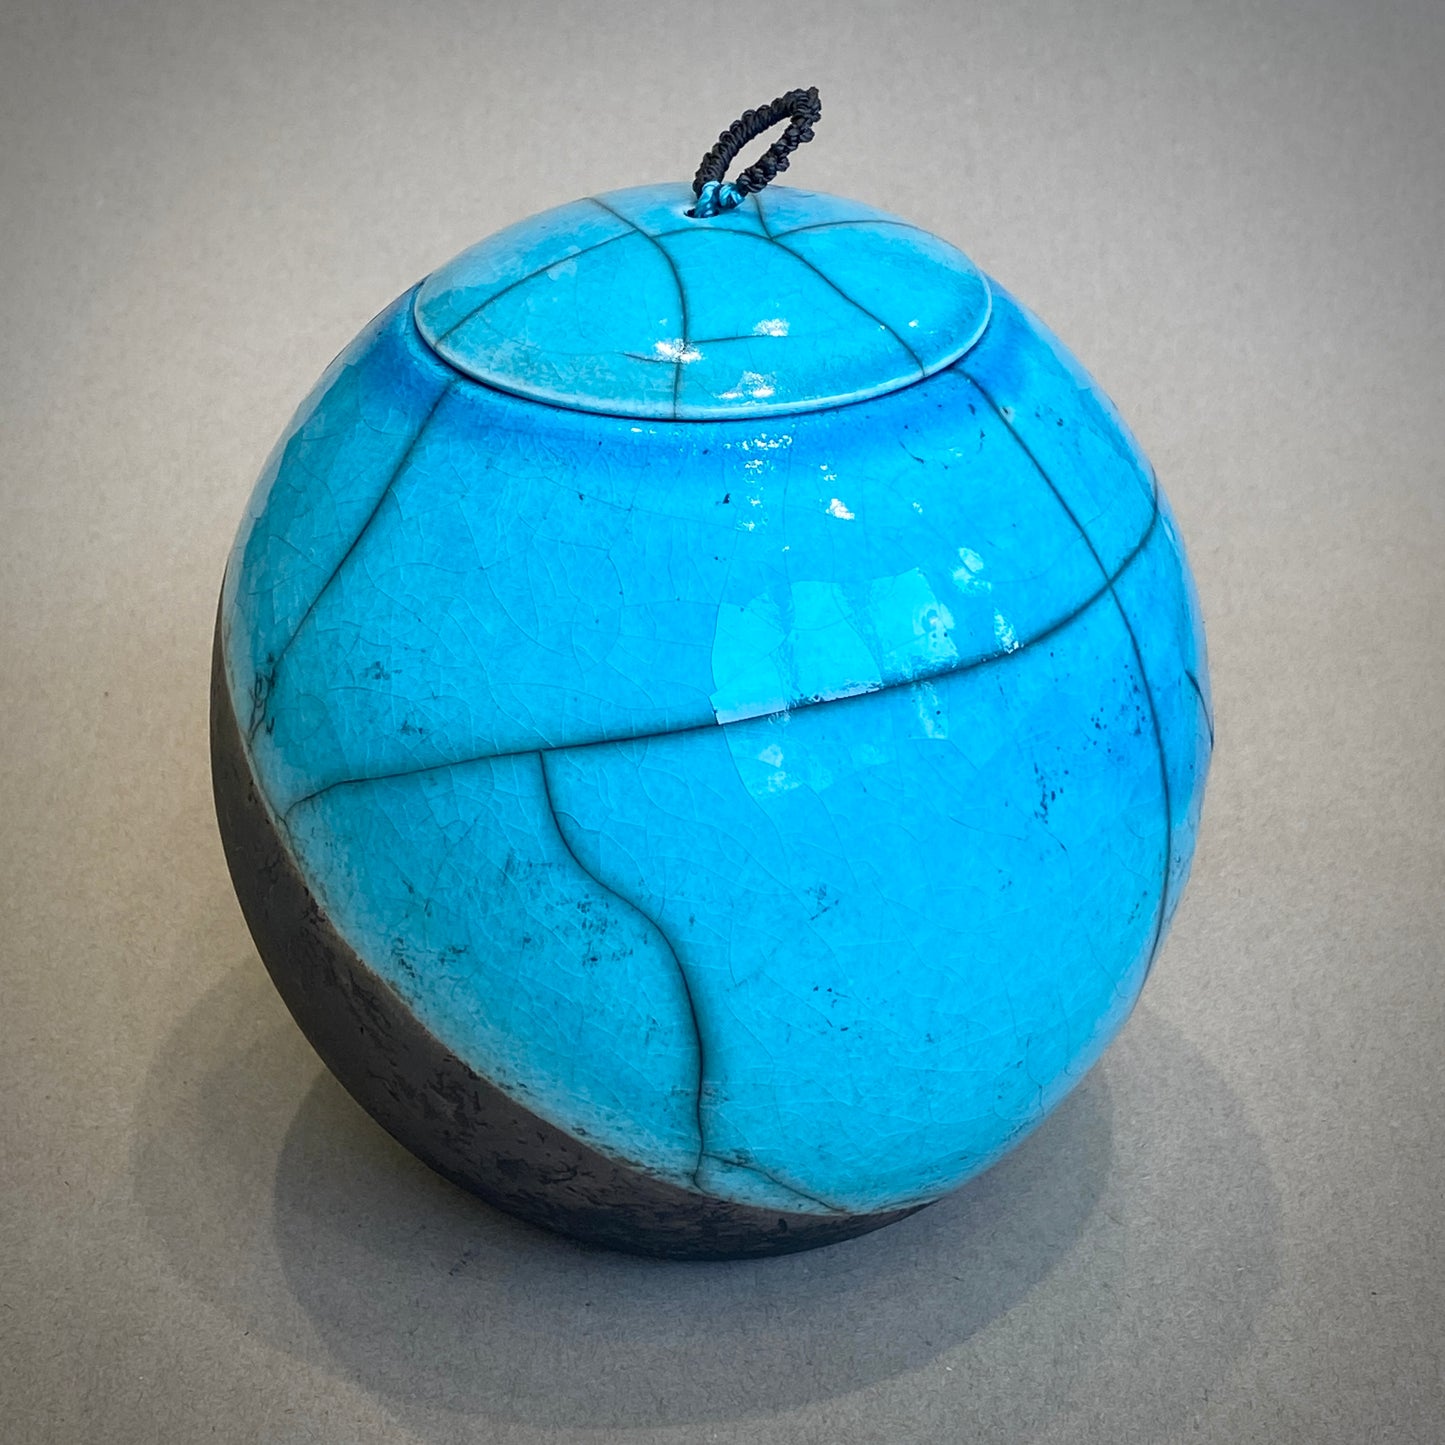 Load image into Gallery viewer, Large Raku Fired Porcelain Jar (blue)
